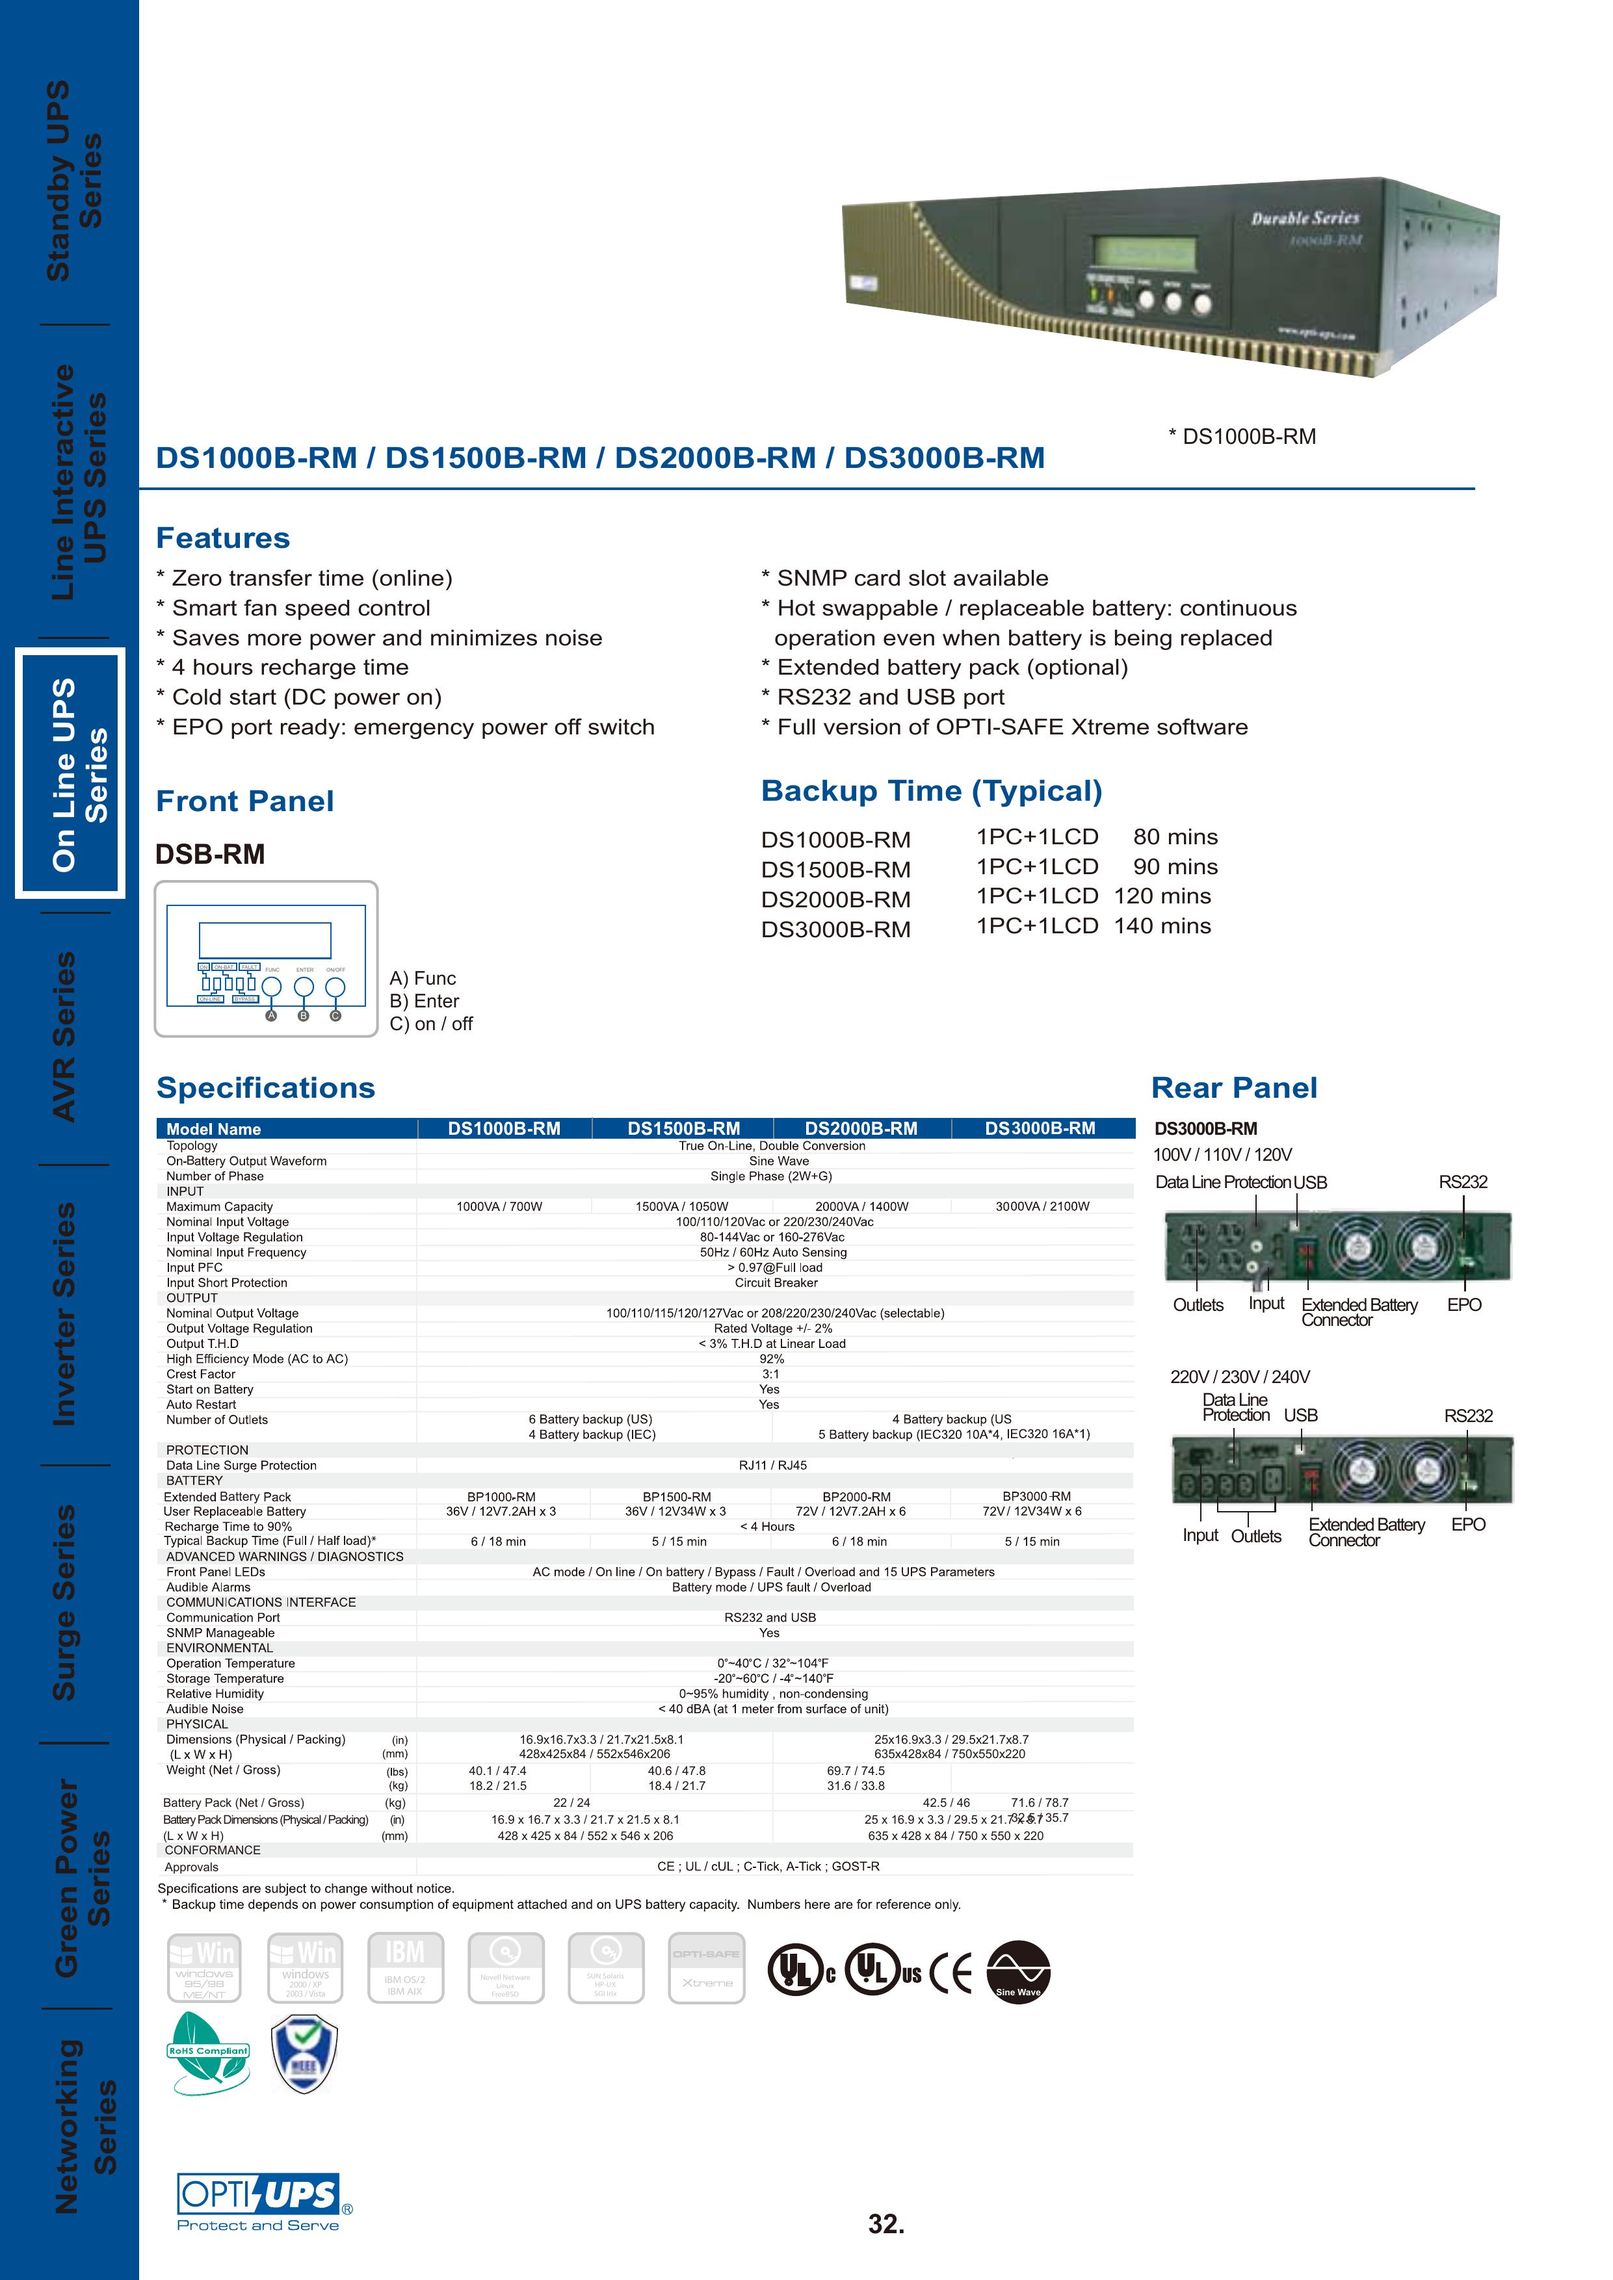 OPTI-UPS DS3000B-RM Power Supply User Manual